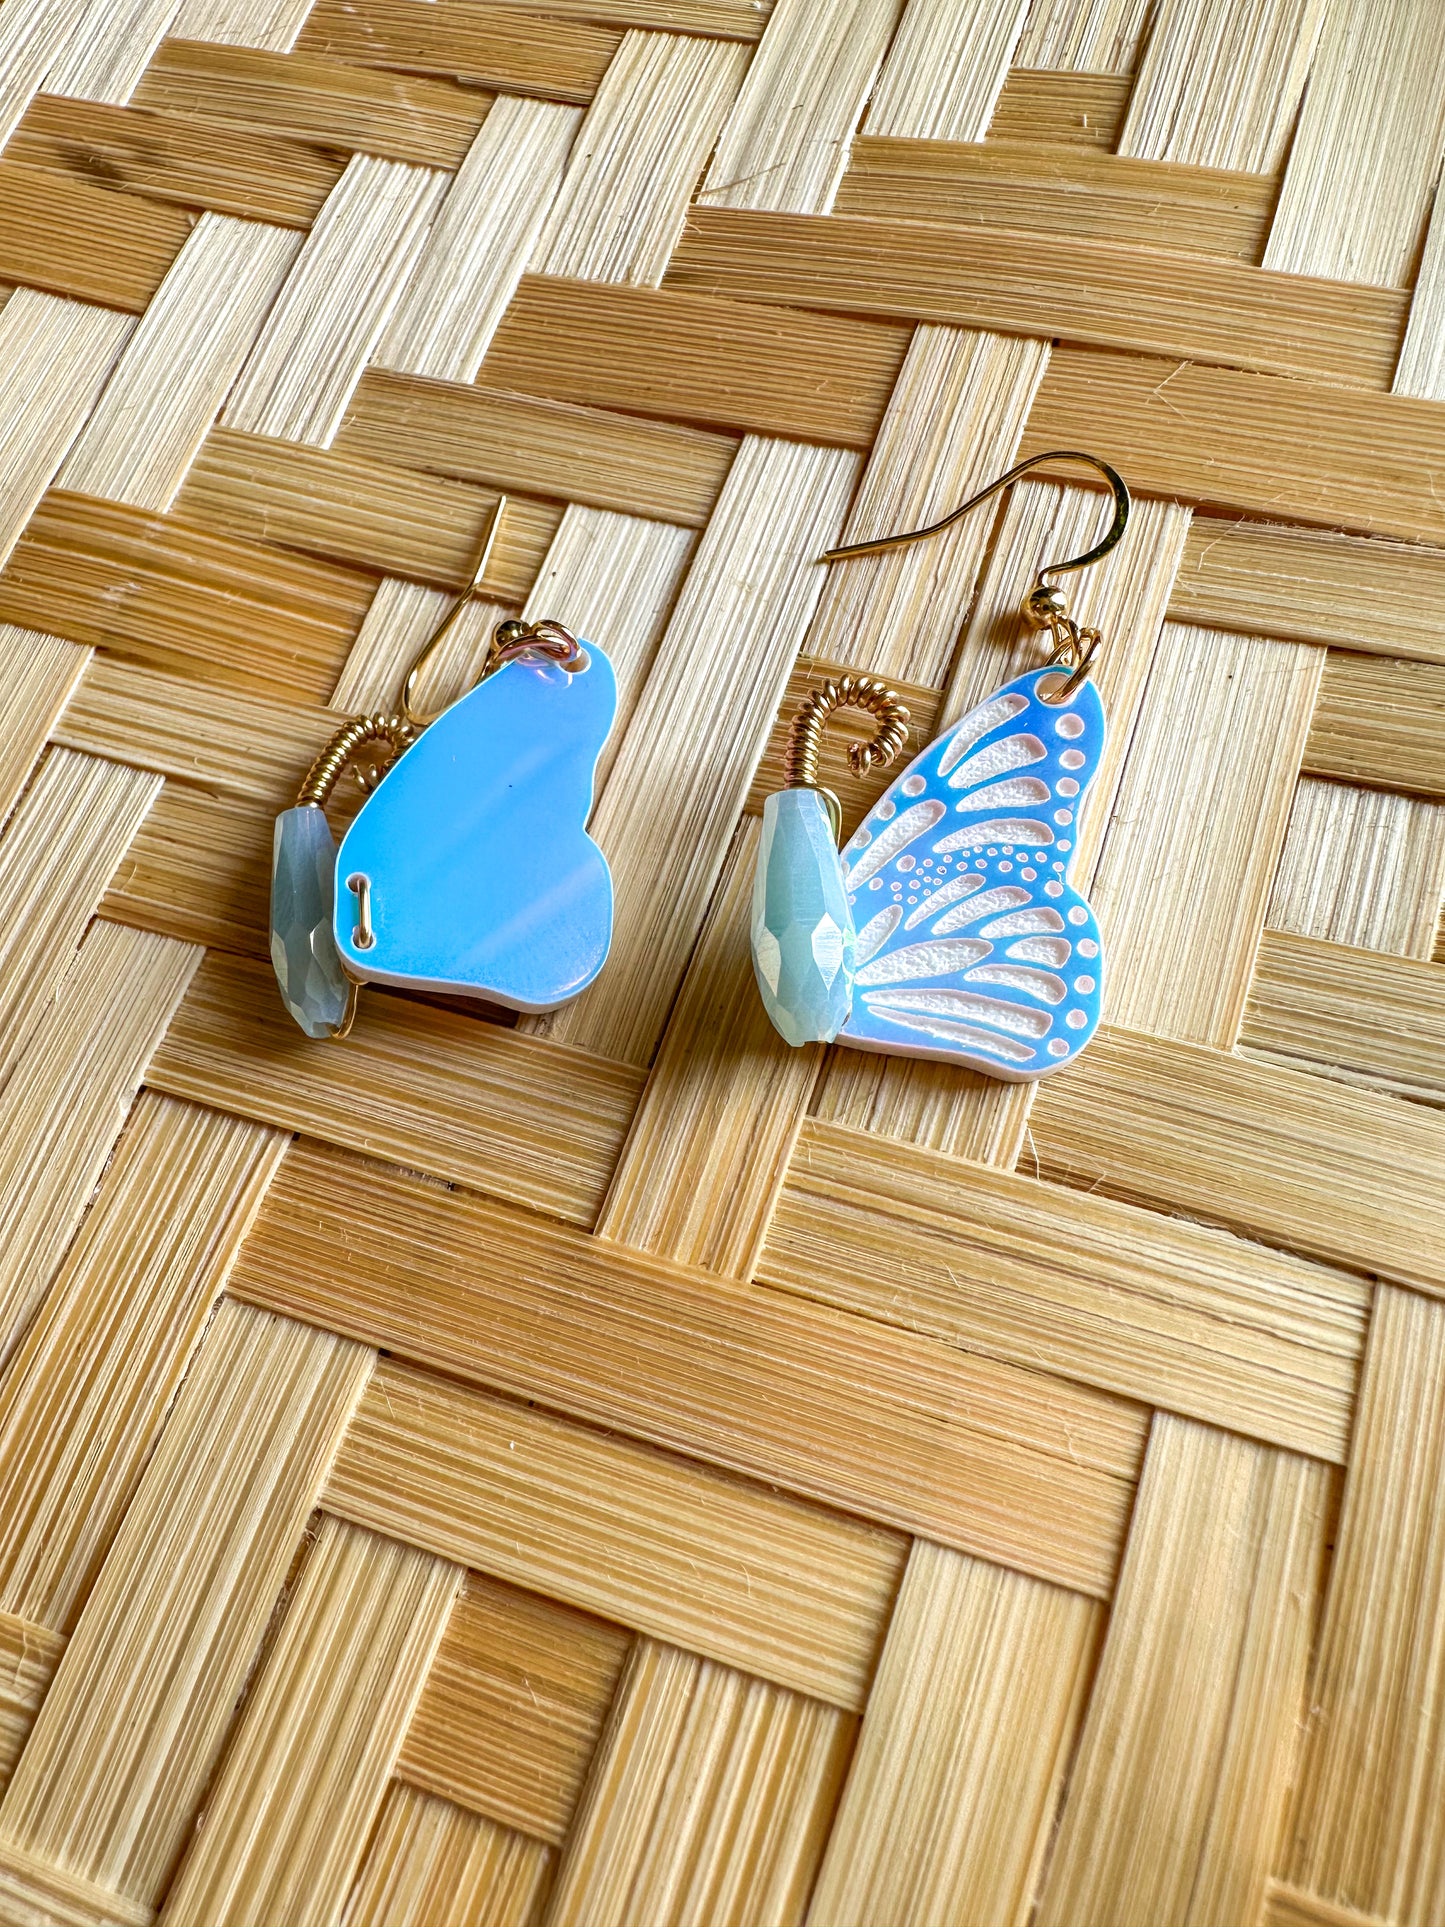 Iridescent Butterfly Earrings